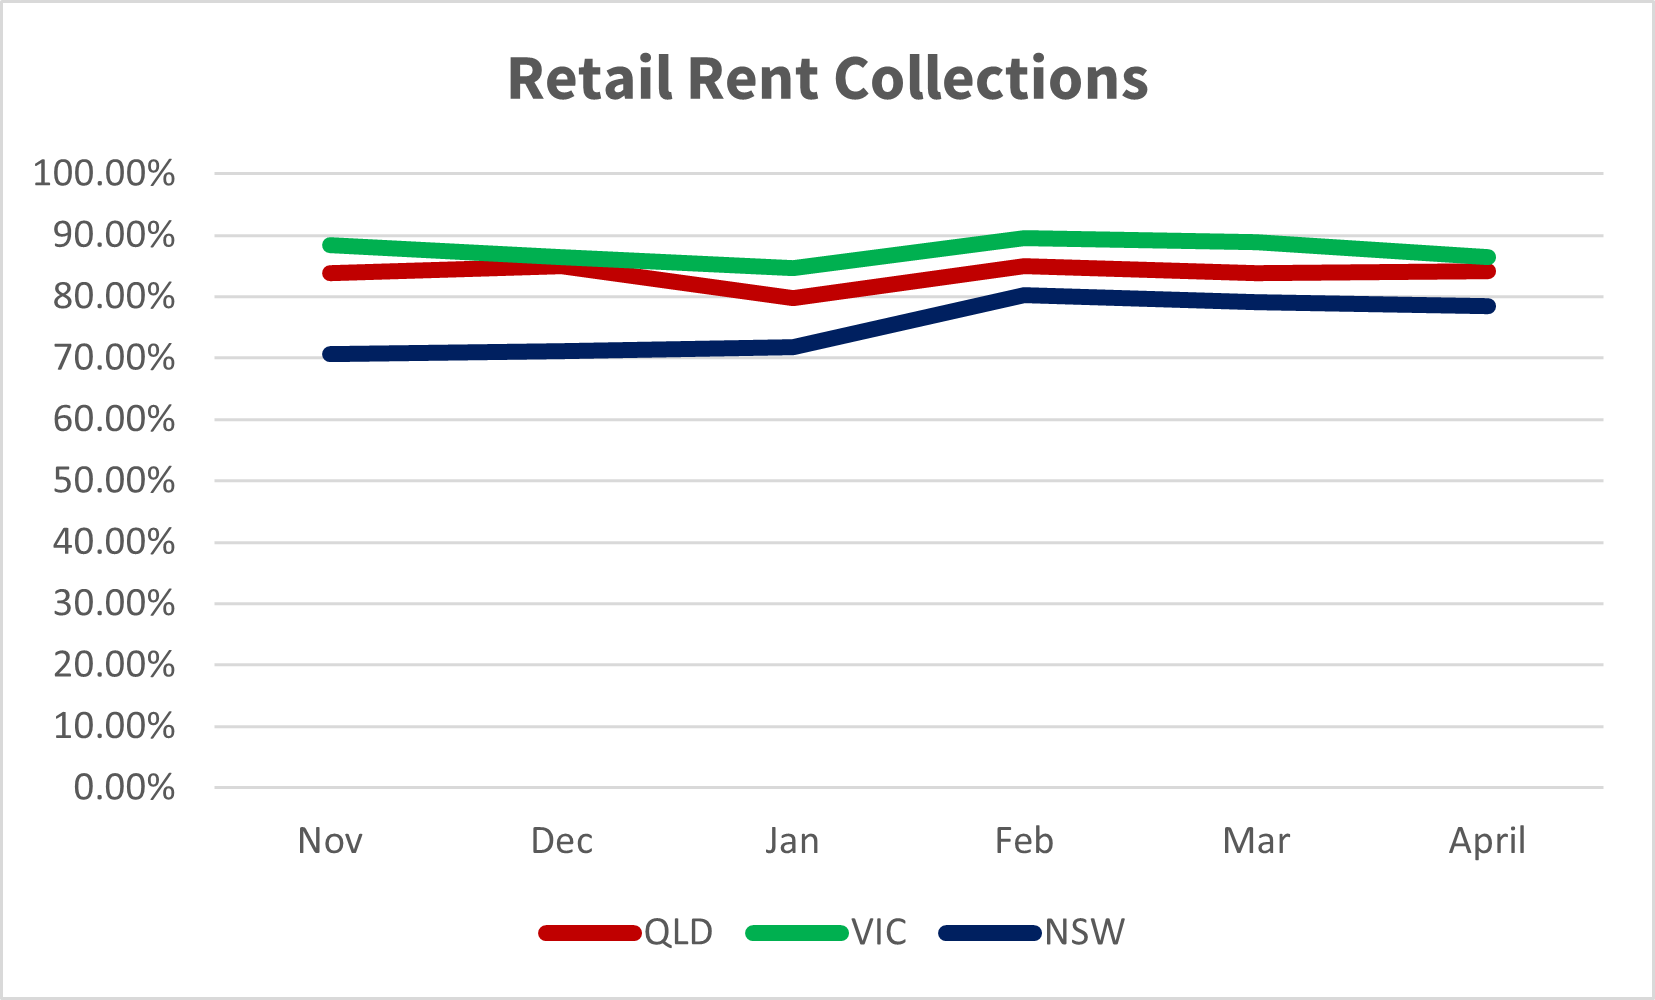 Retail rents